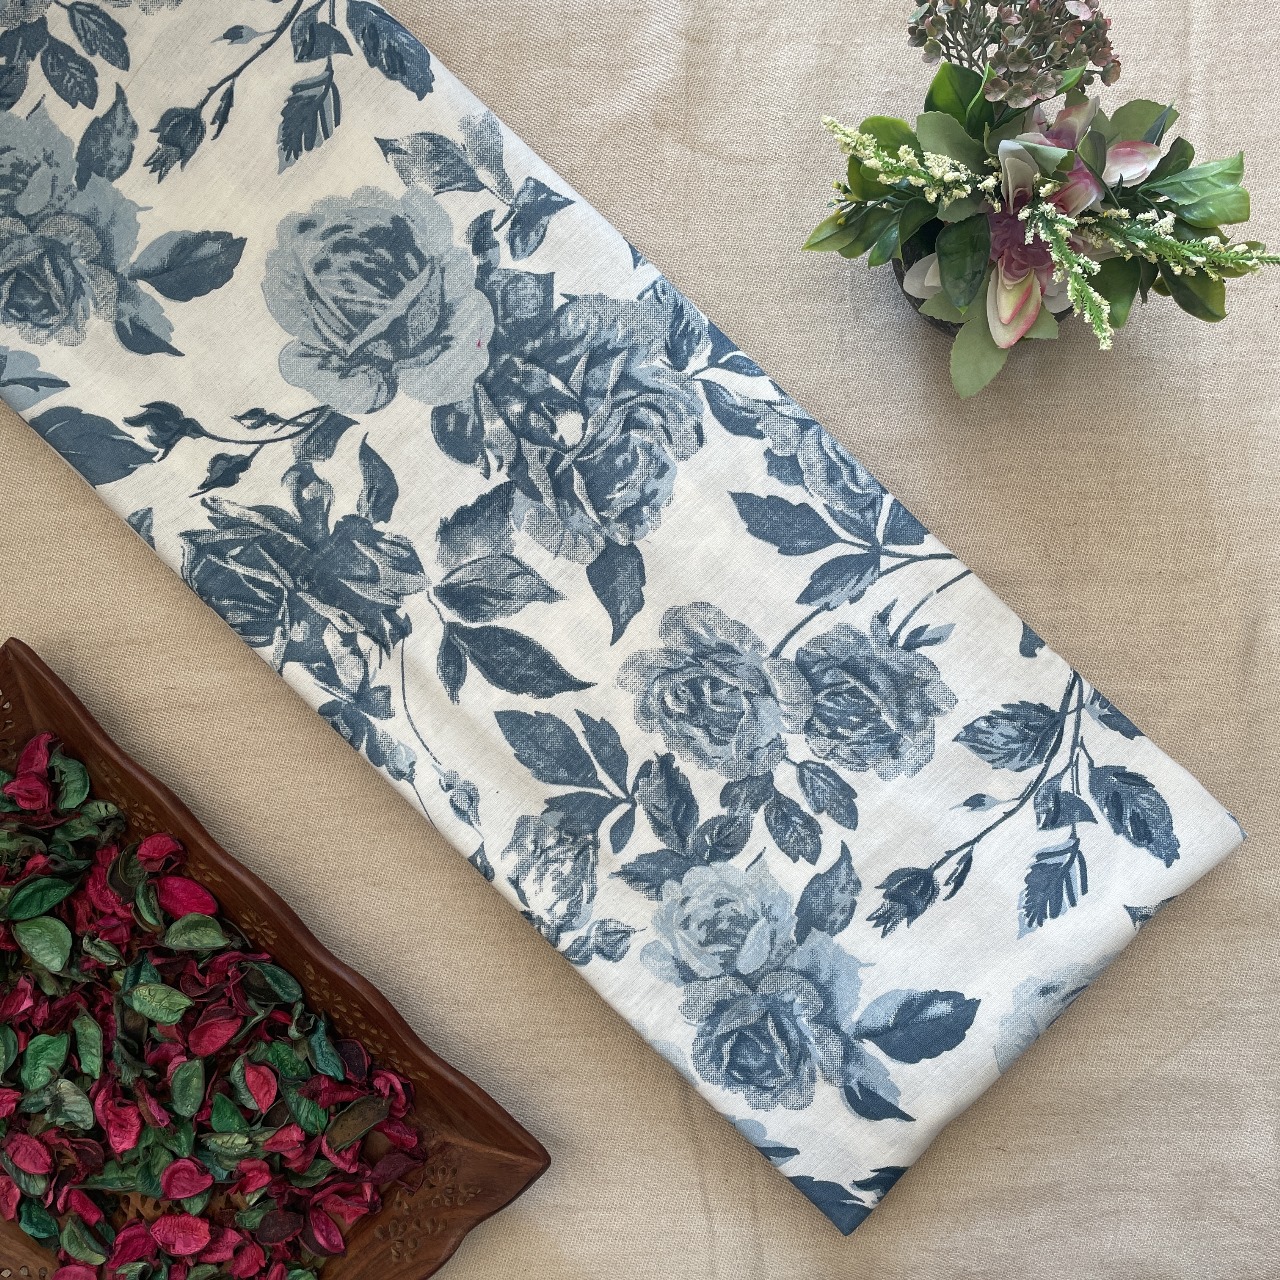 Khadi Cotton Printed Fabric - Floral - White/Navy Blue